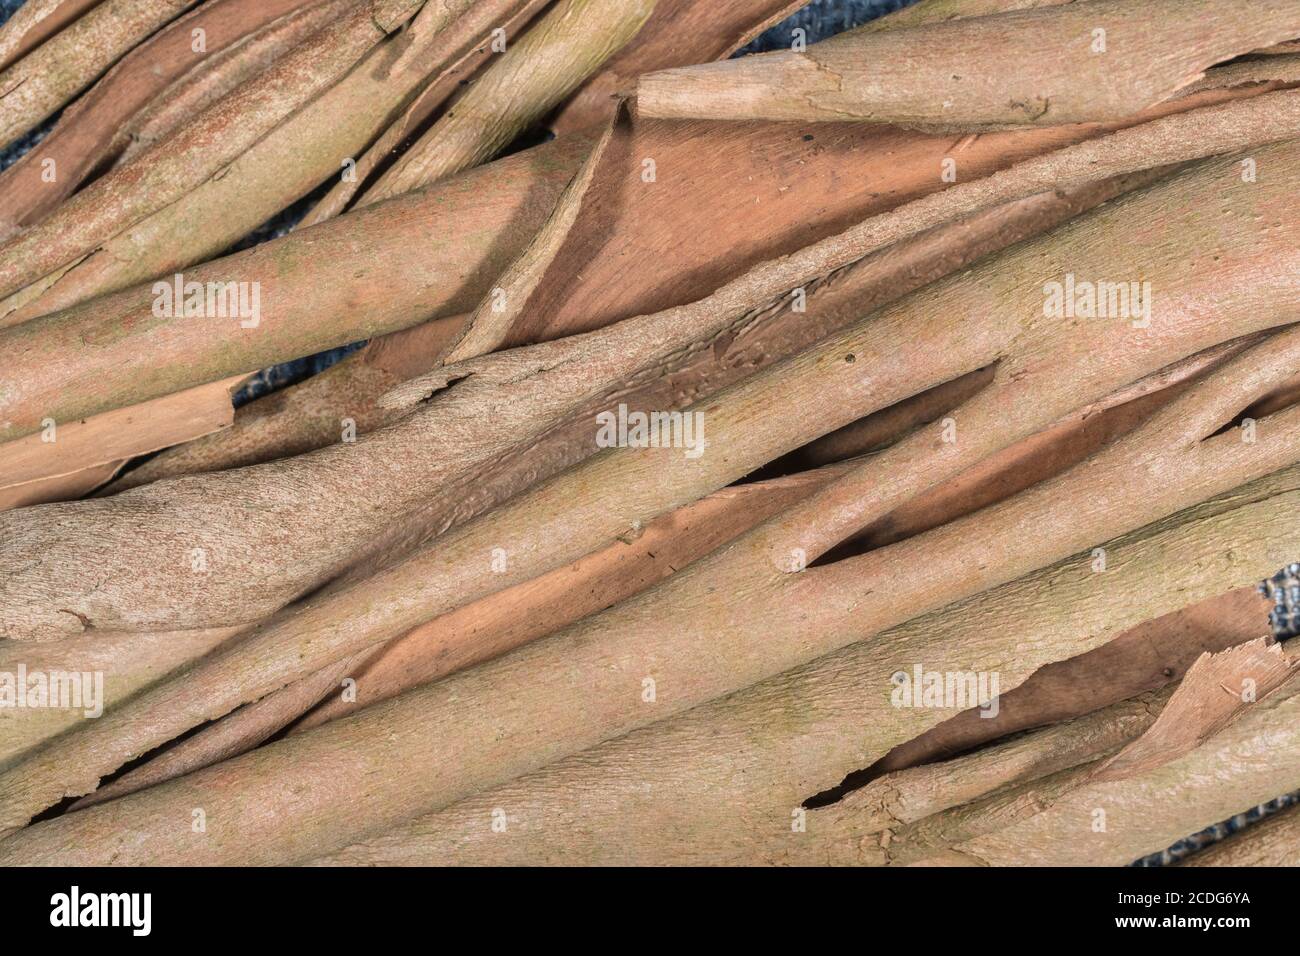 Close up shot of the peeled bark of Eucalyptus tree. Possibly Eucalyptus gunnii / Cider Gum, but may be E. niphophila or E. urnigera. Medicinal plant. Stock Photo